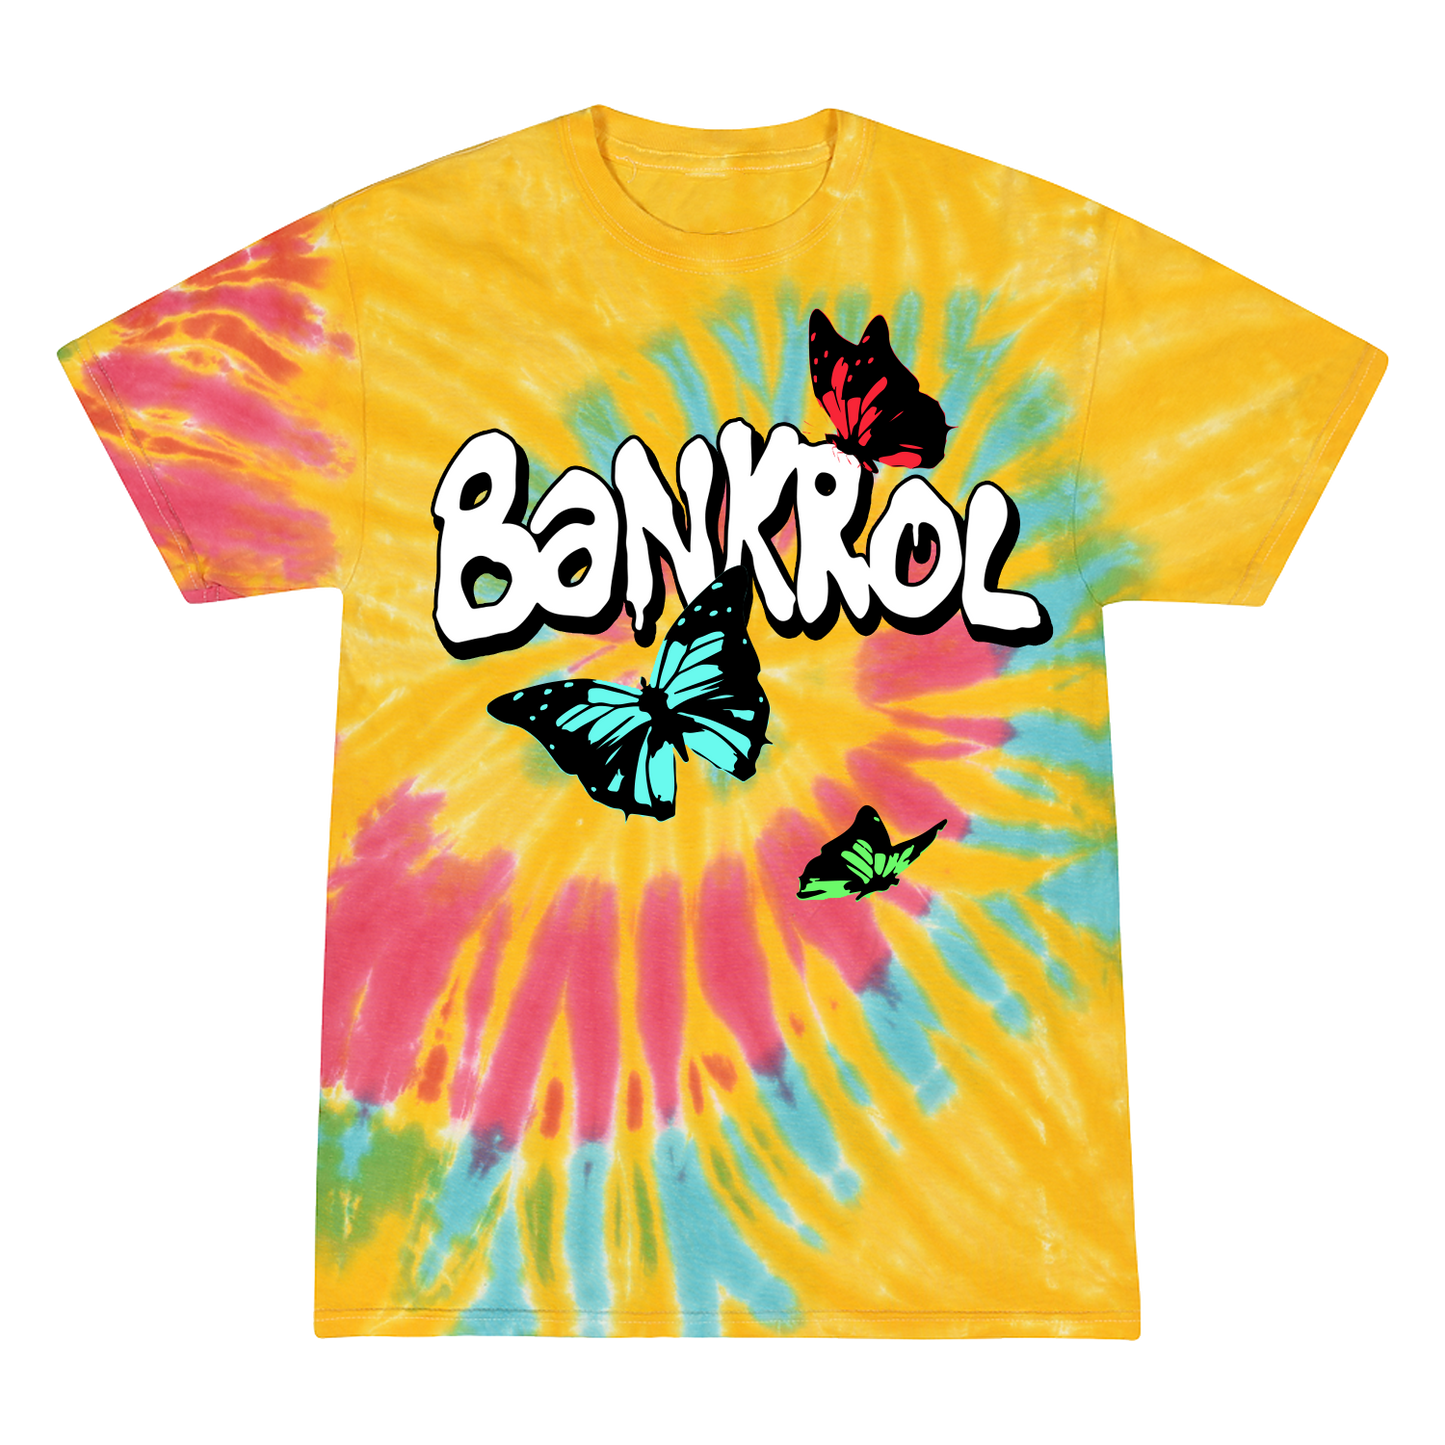 Bankrol Hayden - B.A.N.K.R.O.L. Butterfly (Multi-Color)